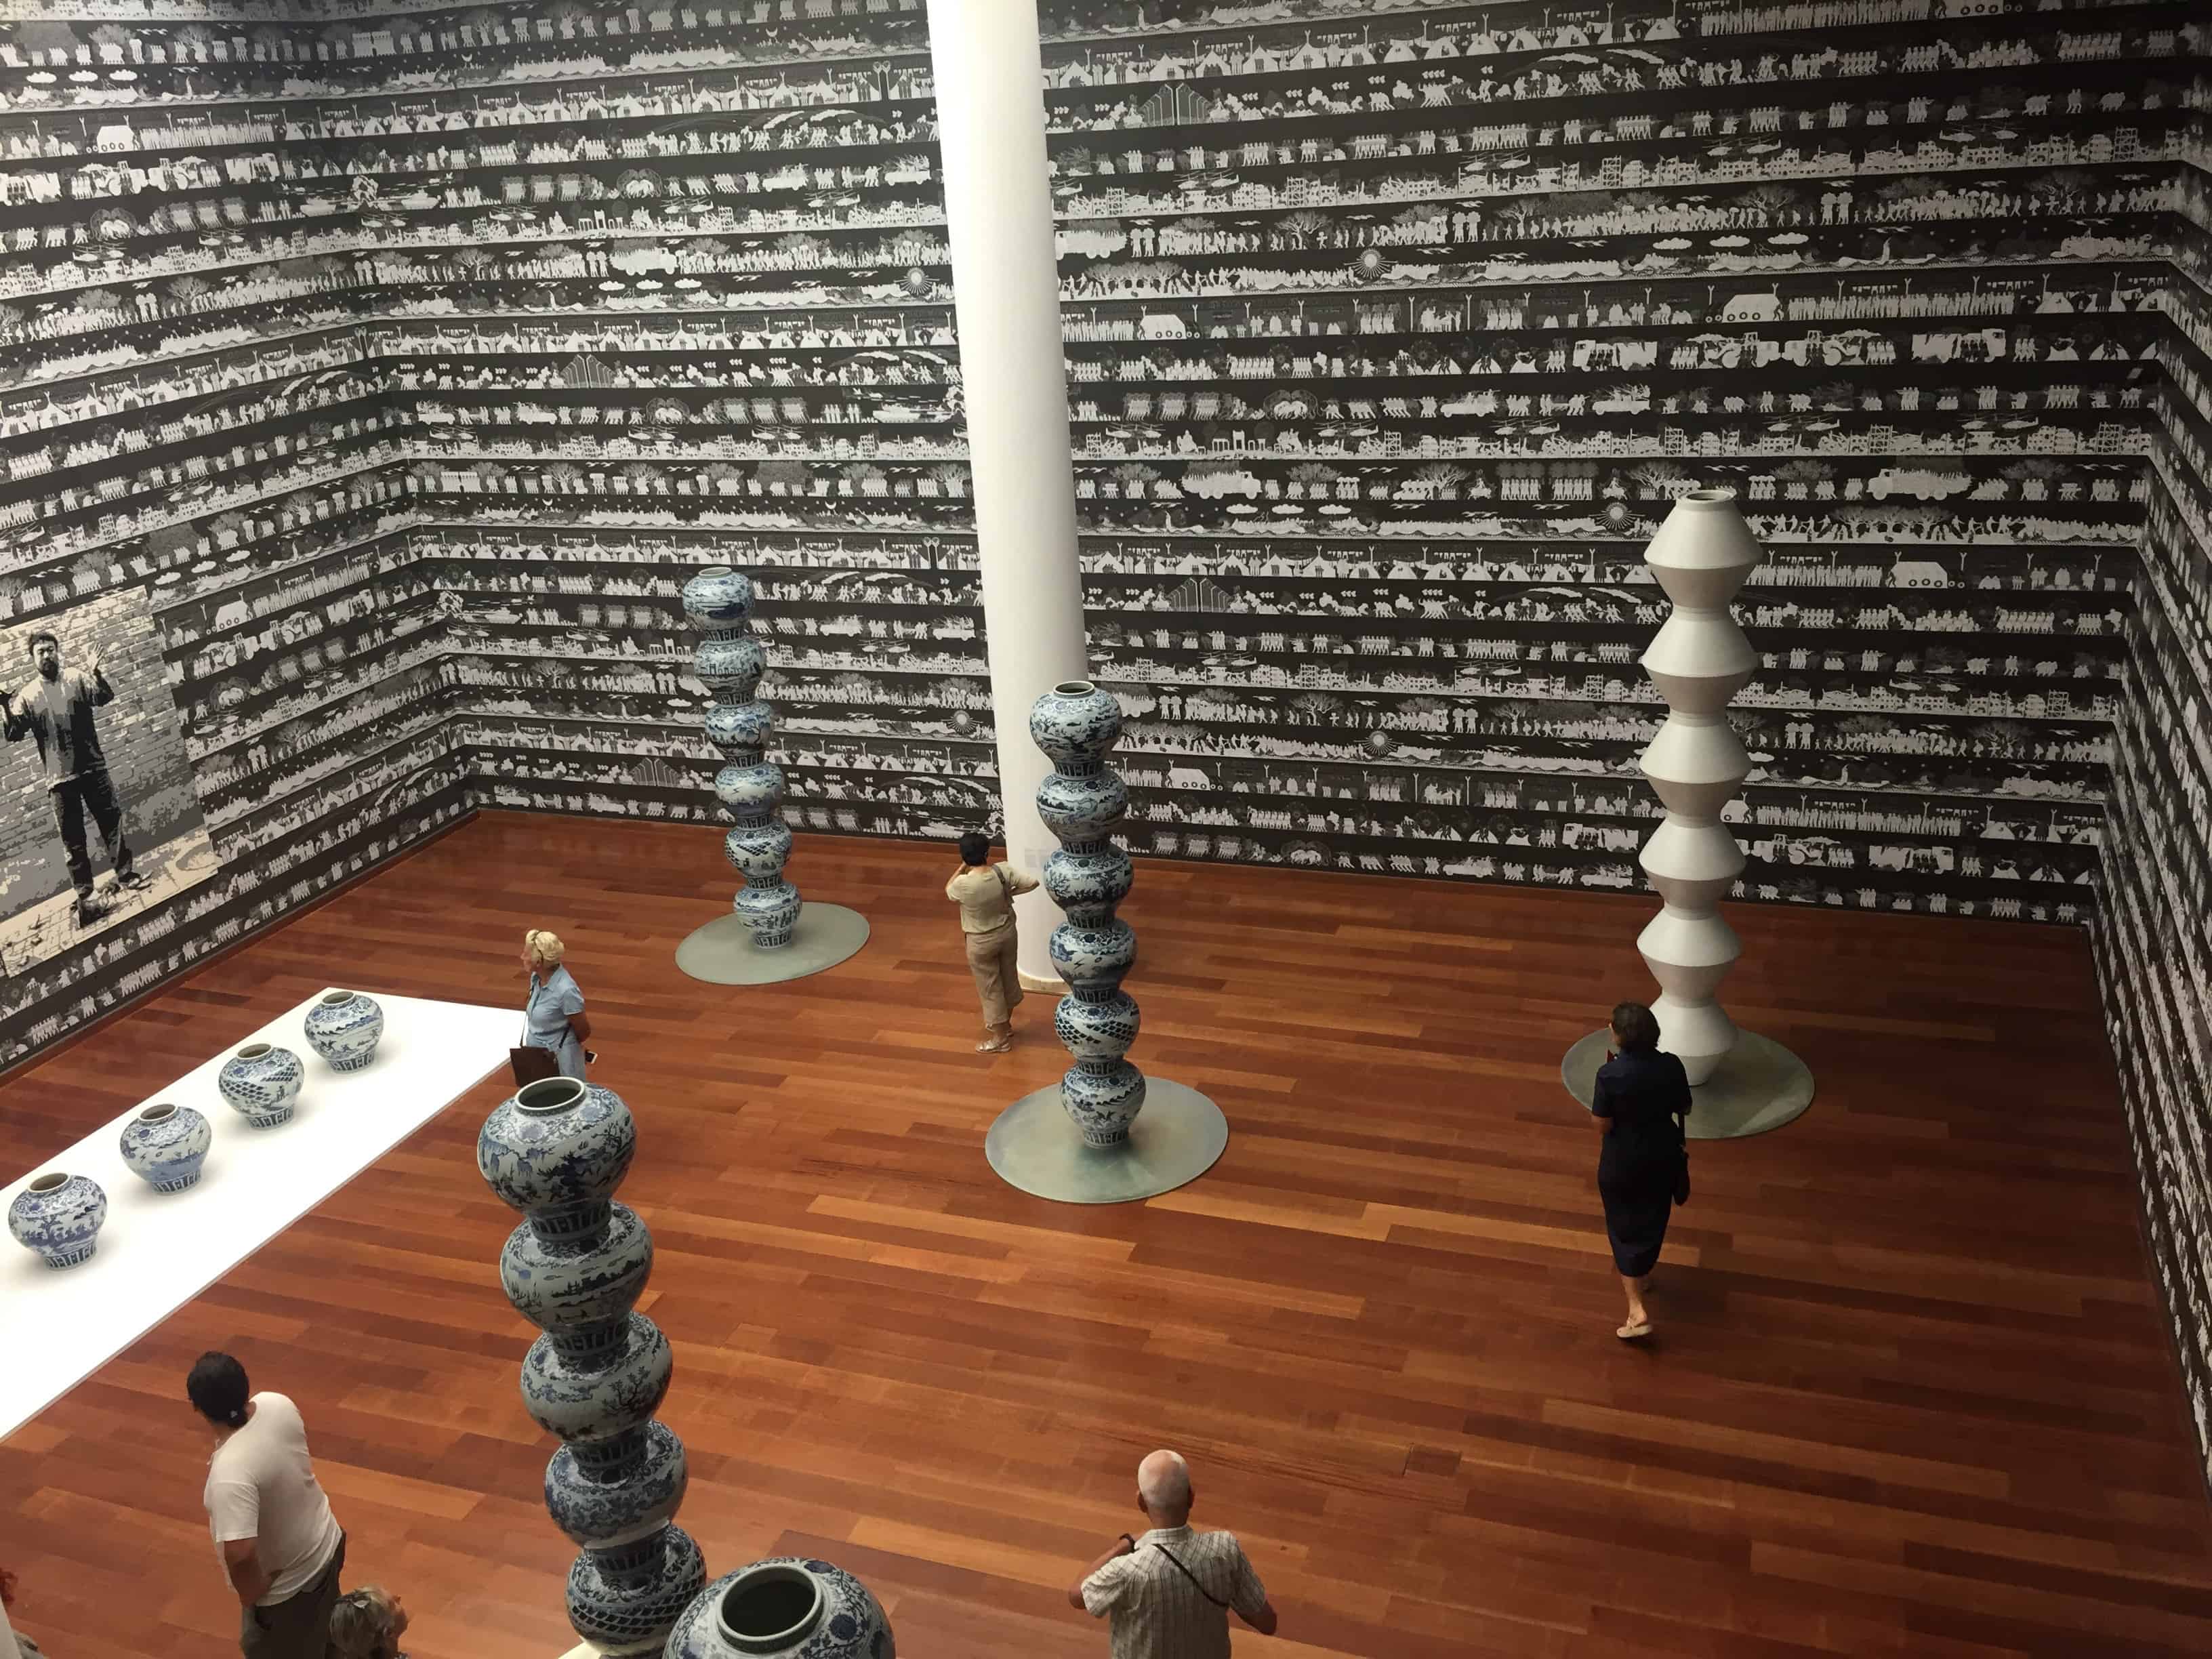 "Odyssey" by Ai Wei Wei at Sakip Sabanci Museum